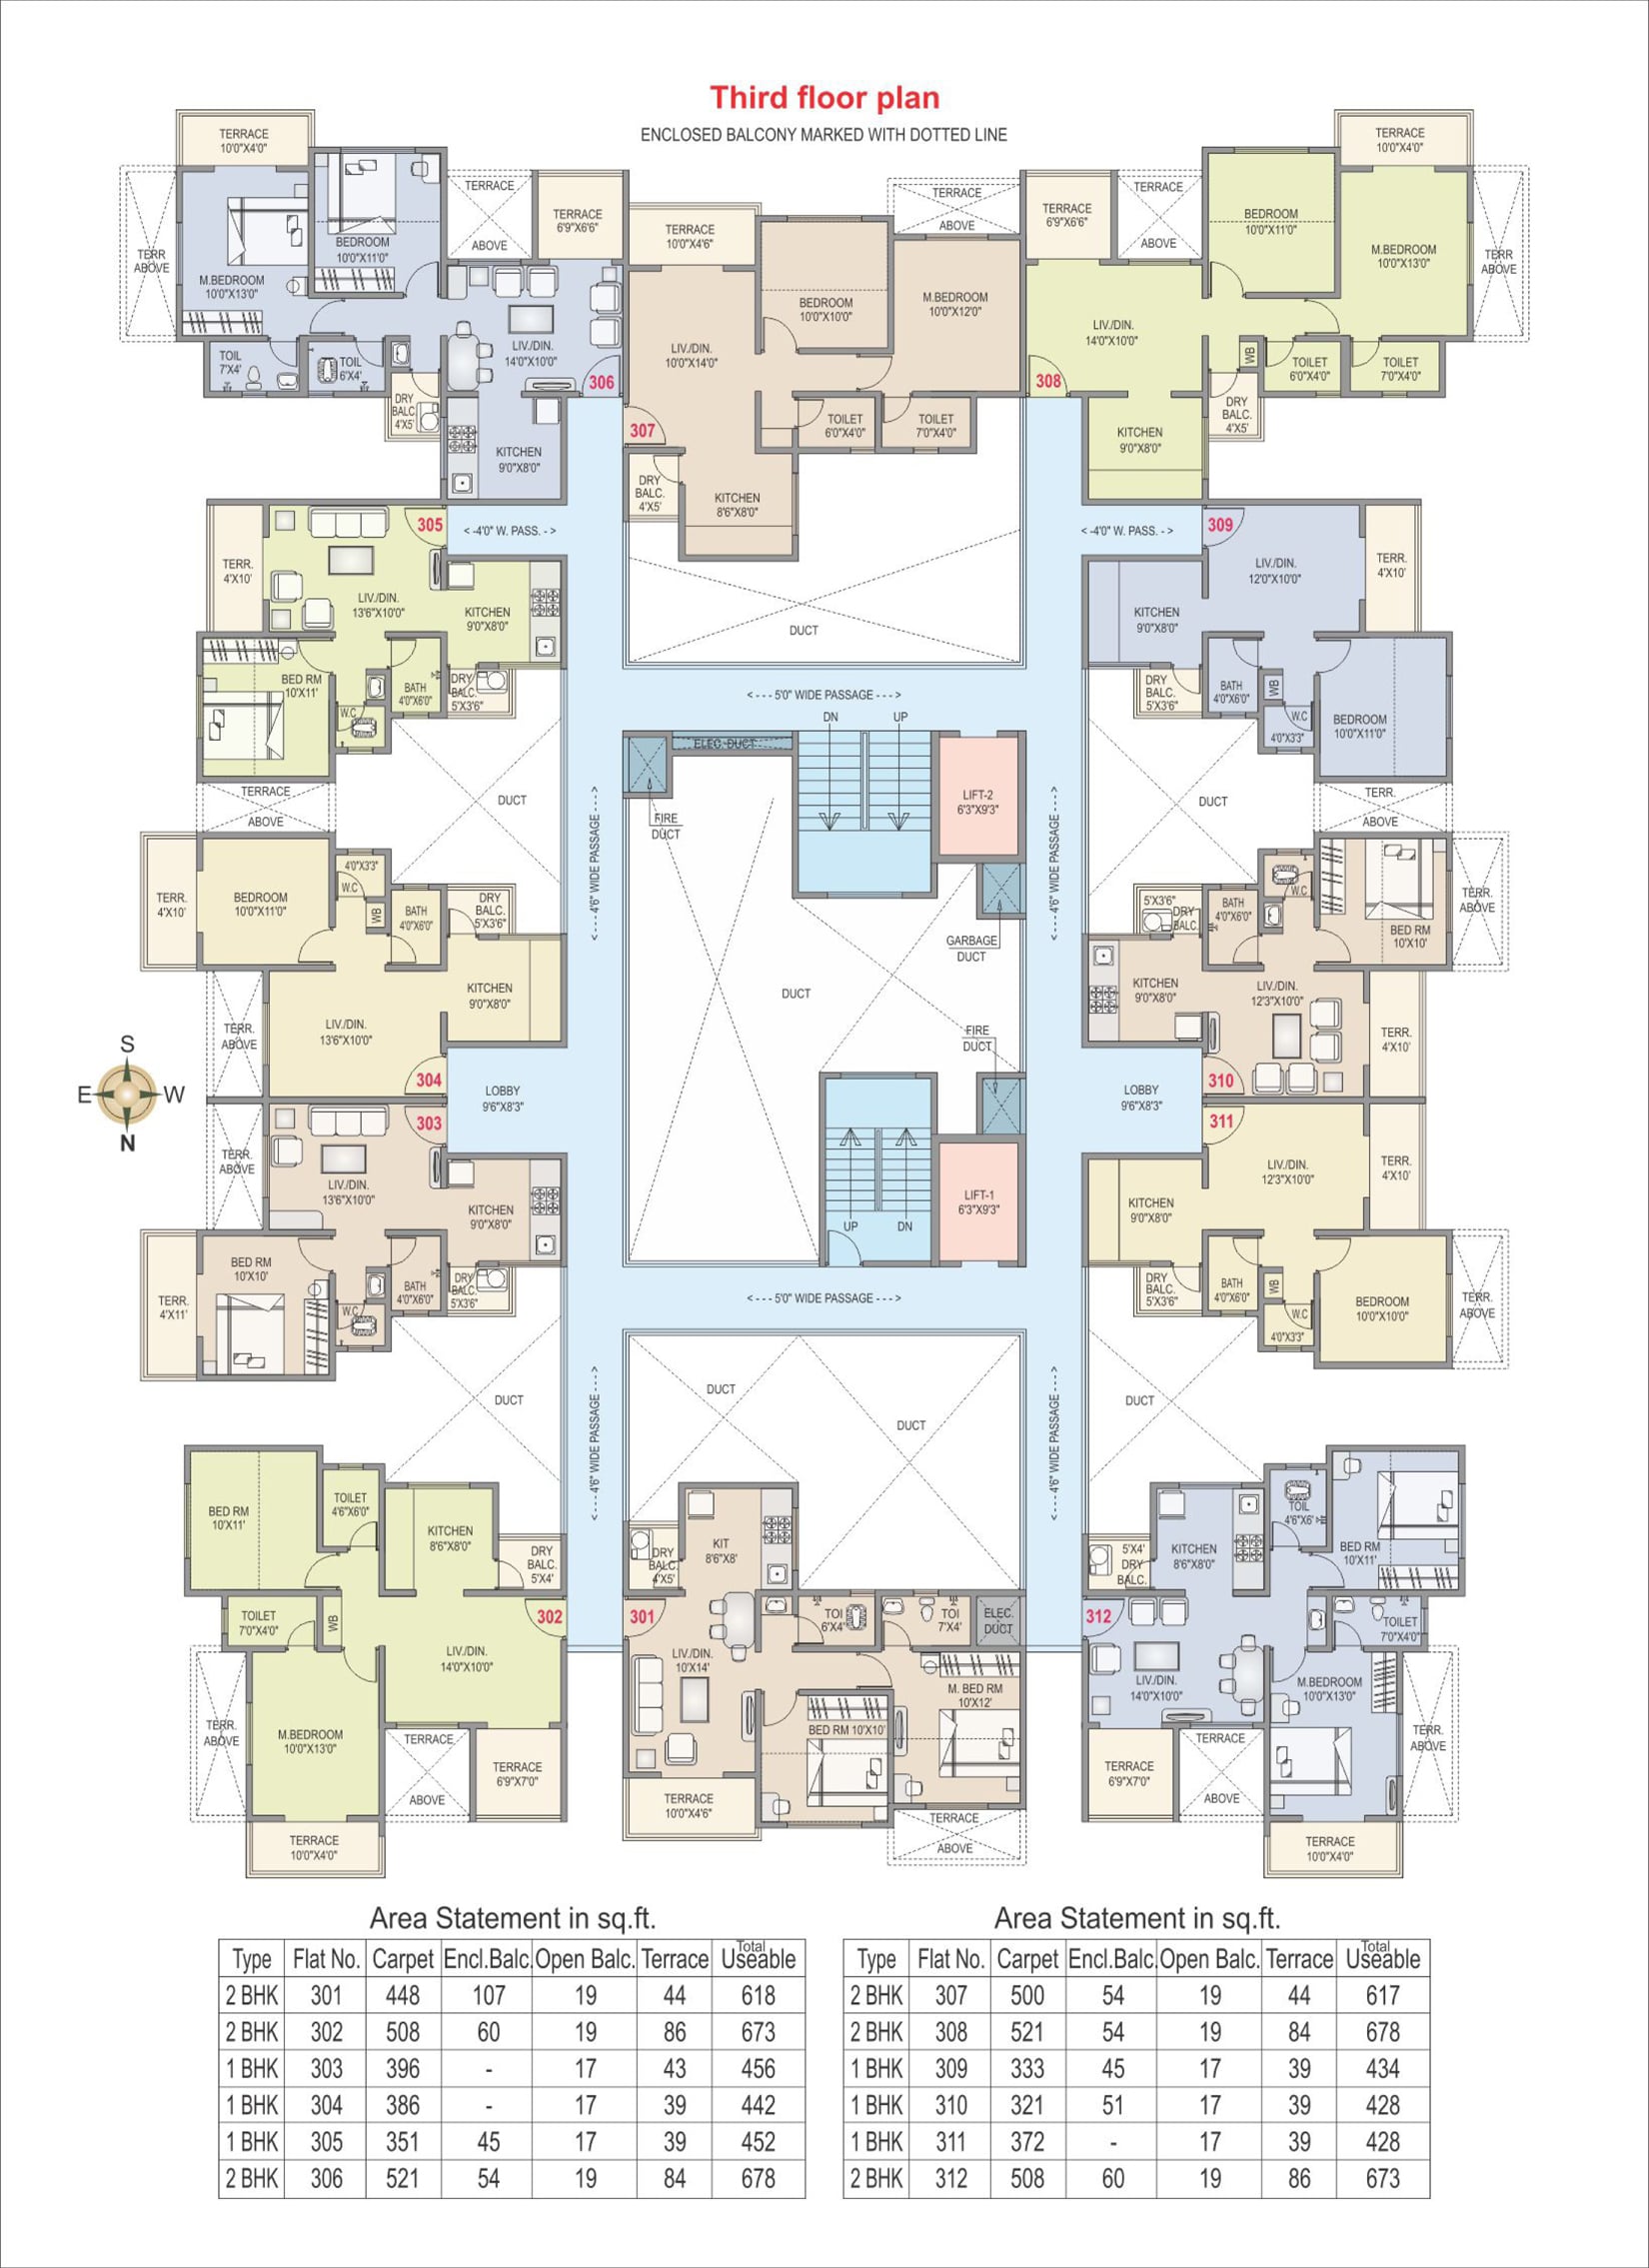 RKL Anand - Third Floor Plan